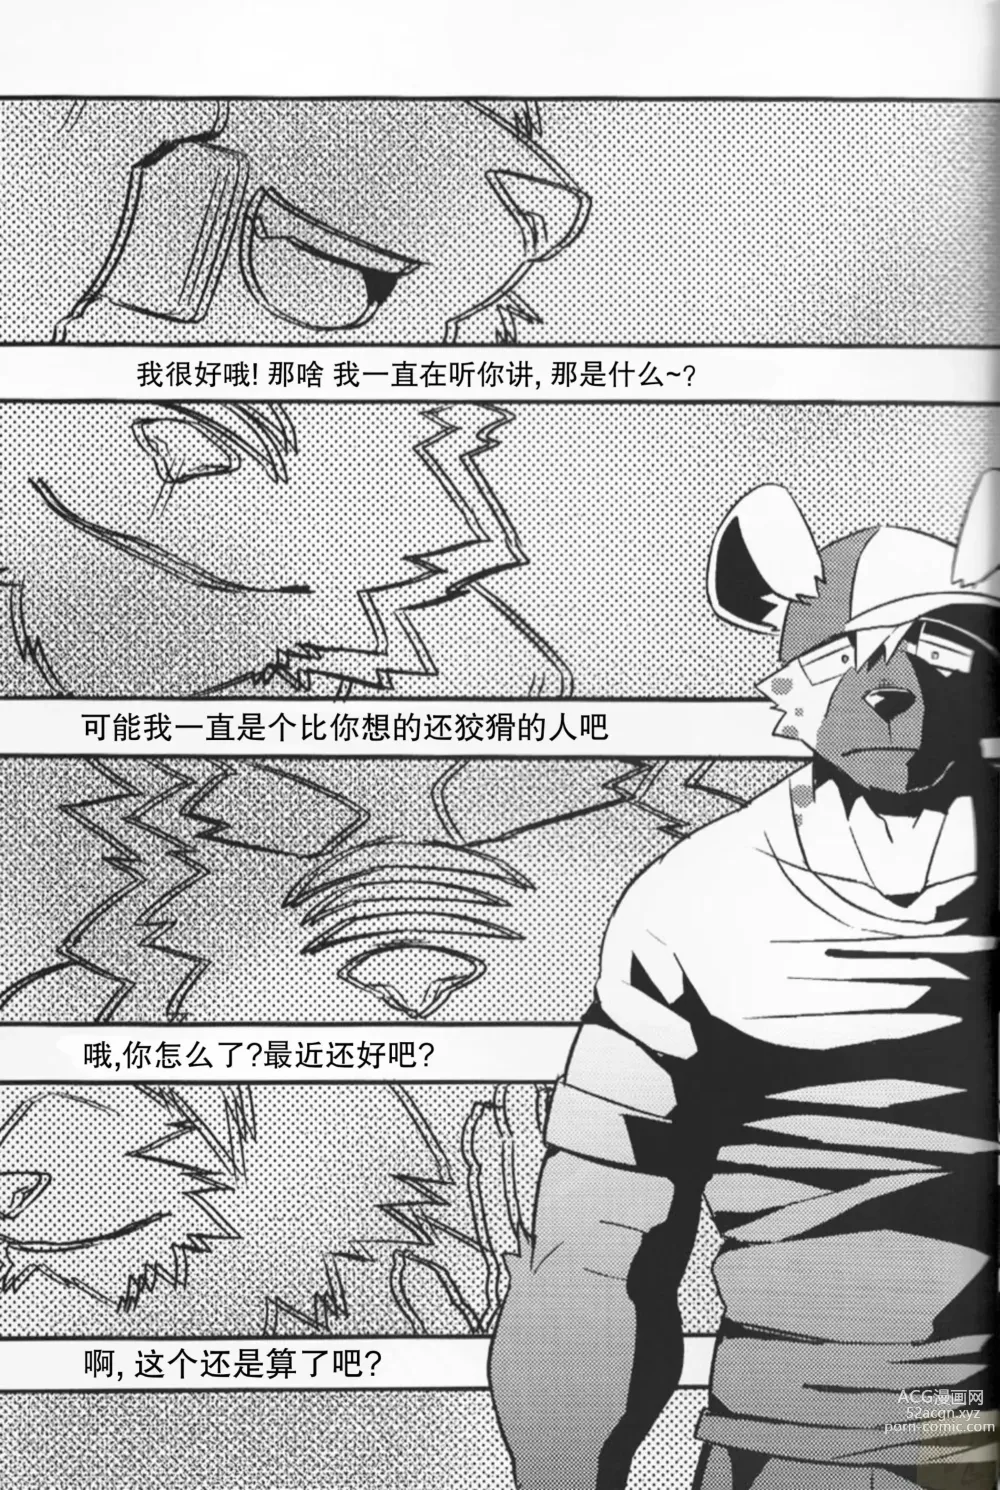 Page 16 of doujinshi paradox